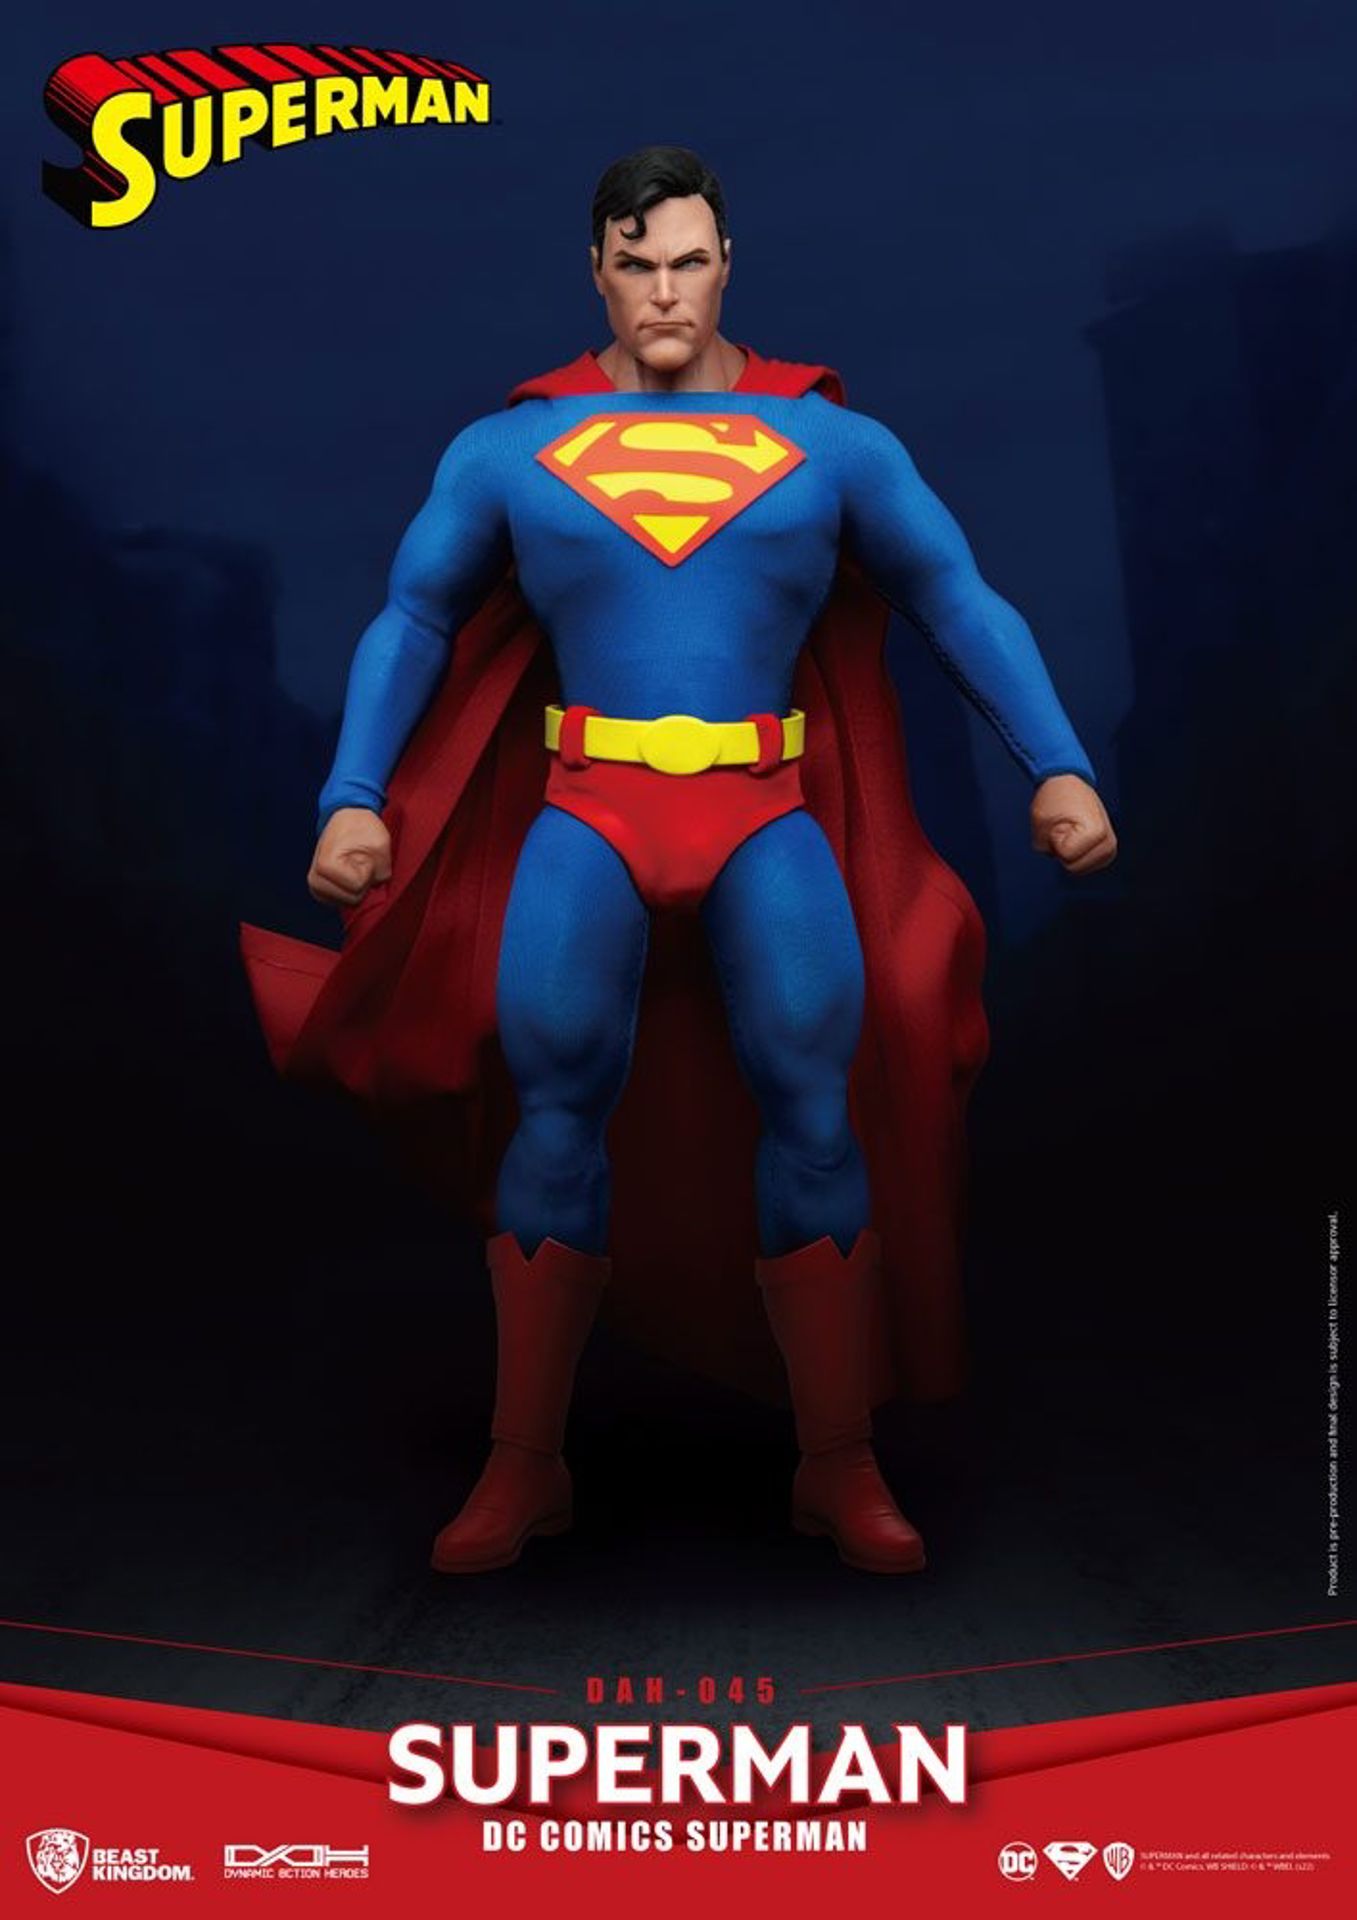 DC Comics - DAH-045 - Superman